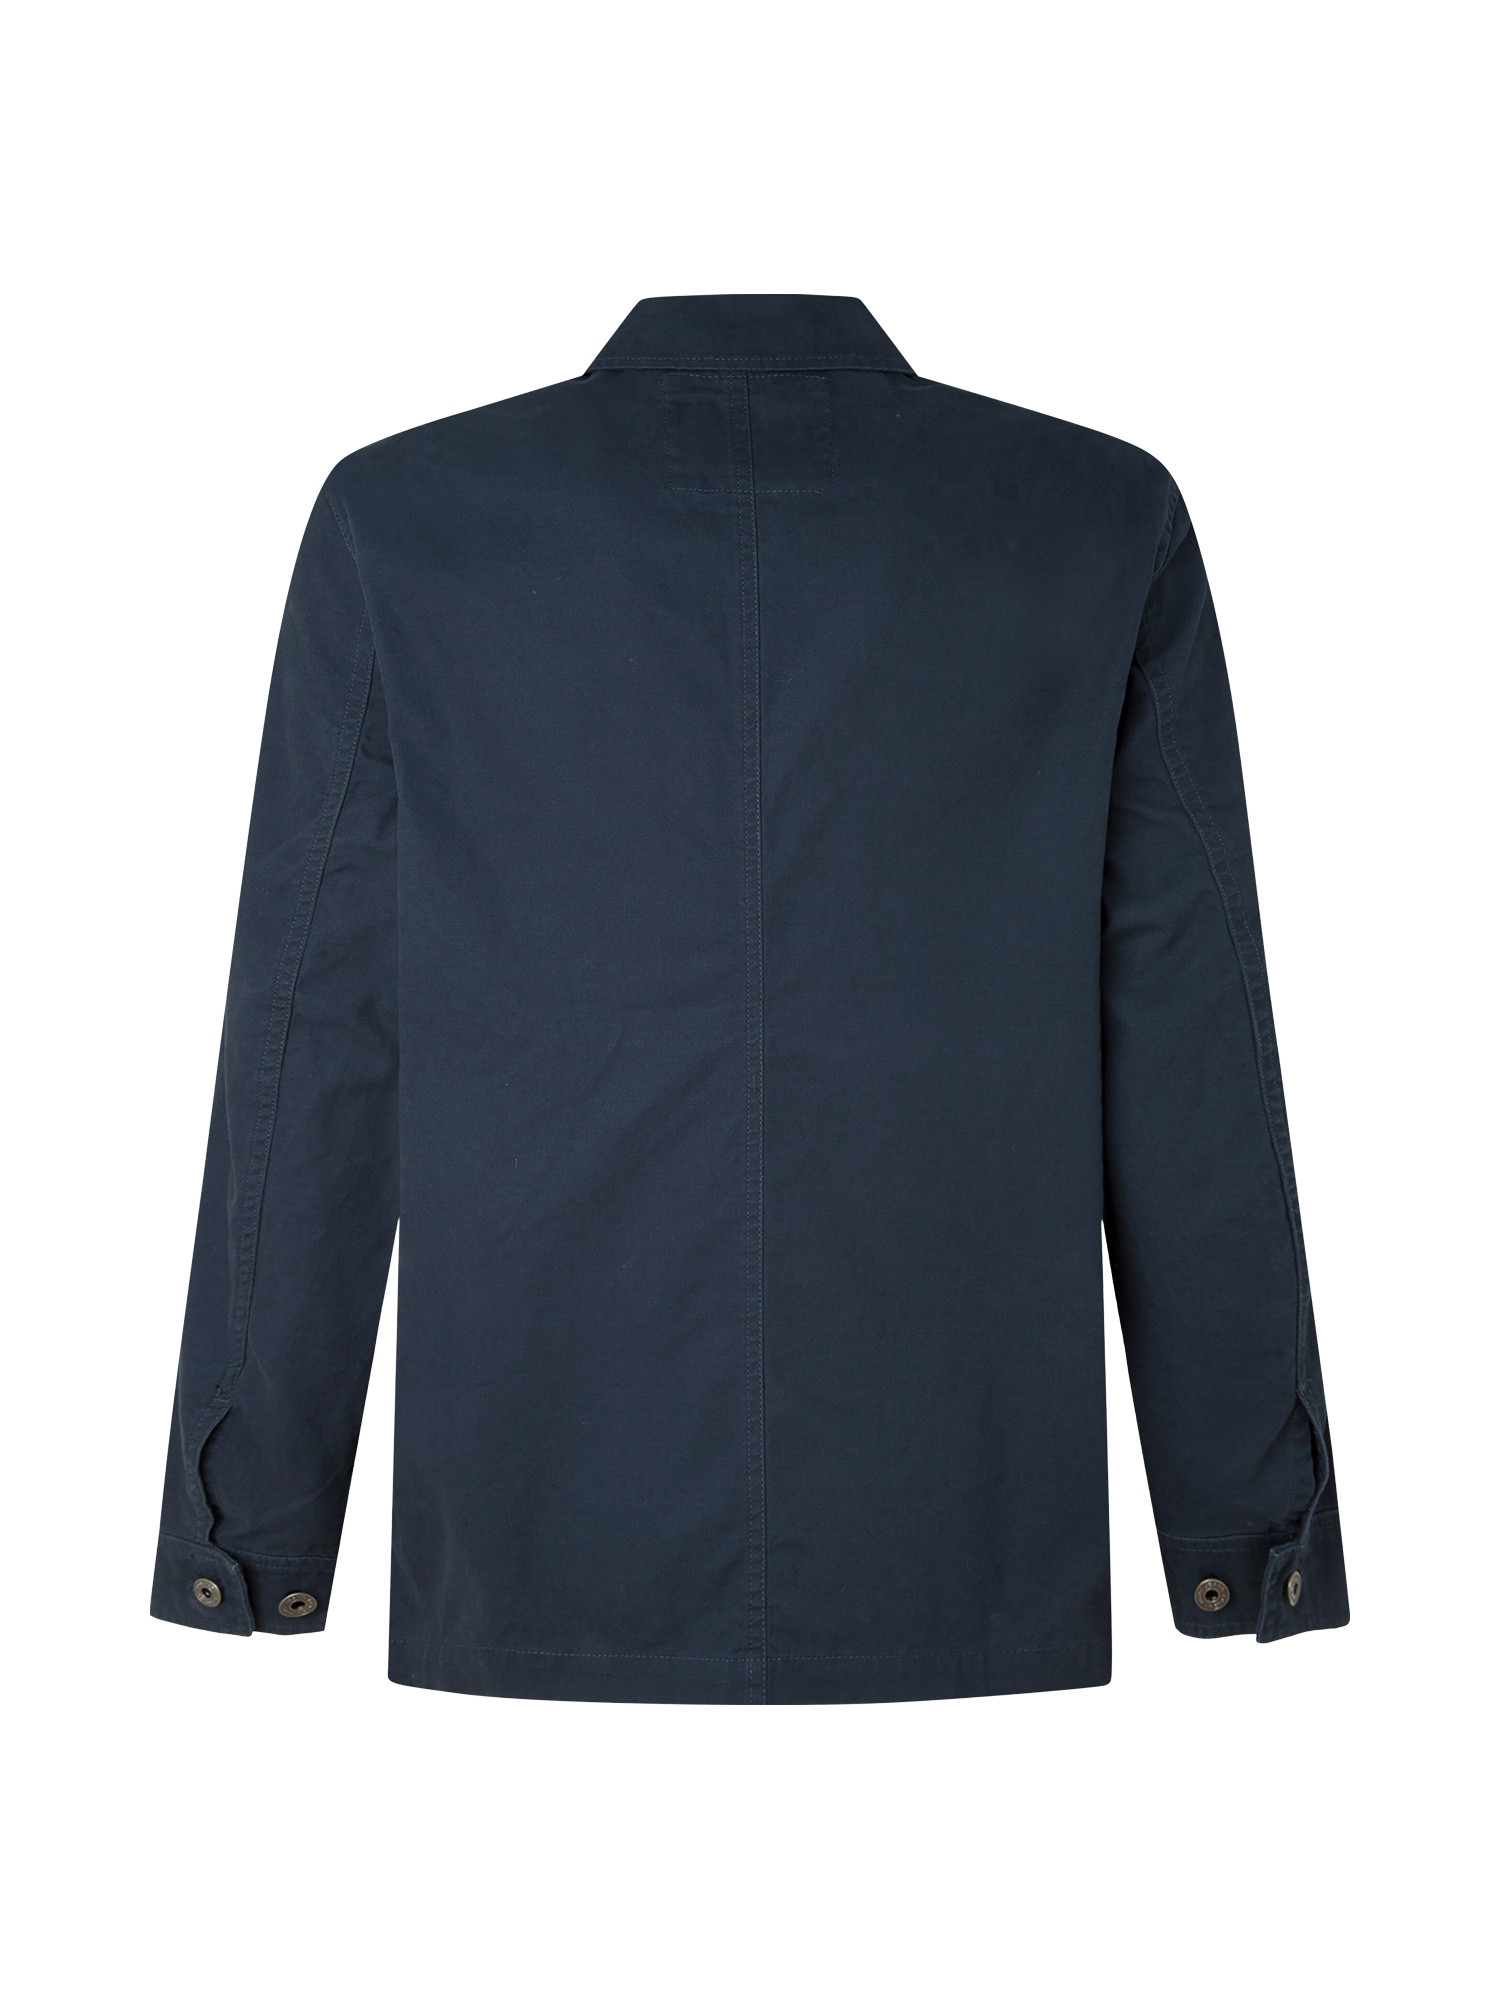 Pepe Jeans - Cotton jacket, Dark Blue, large image number 1